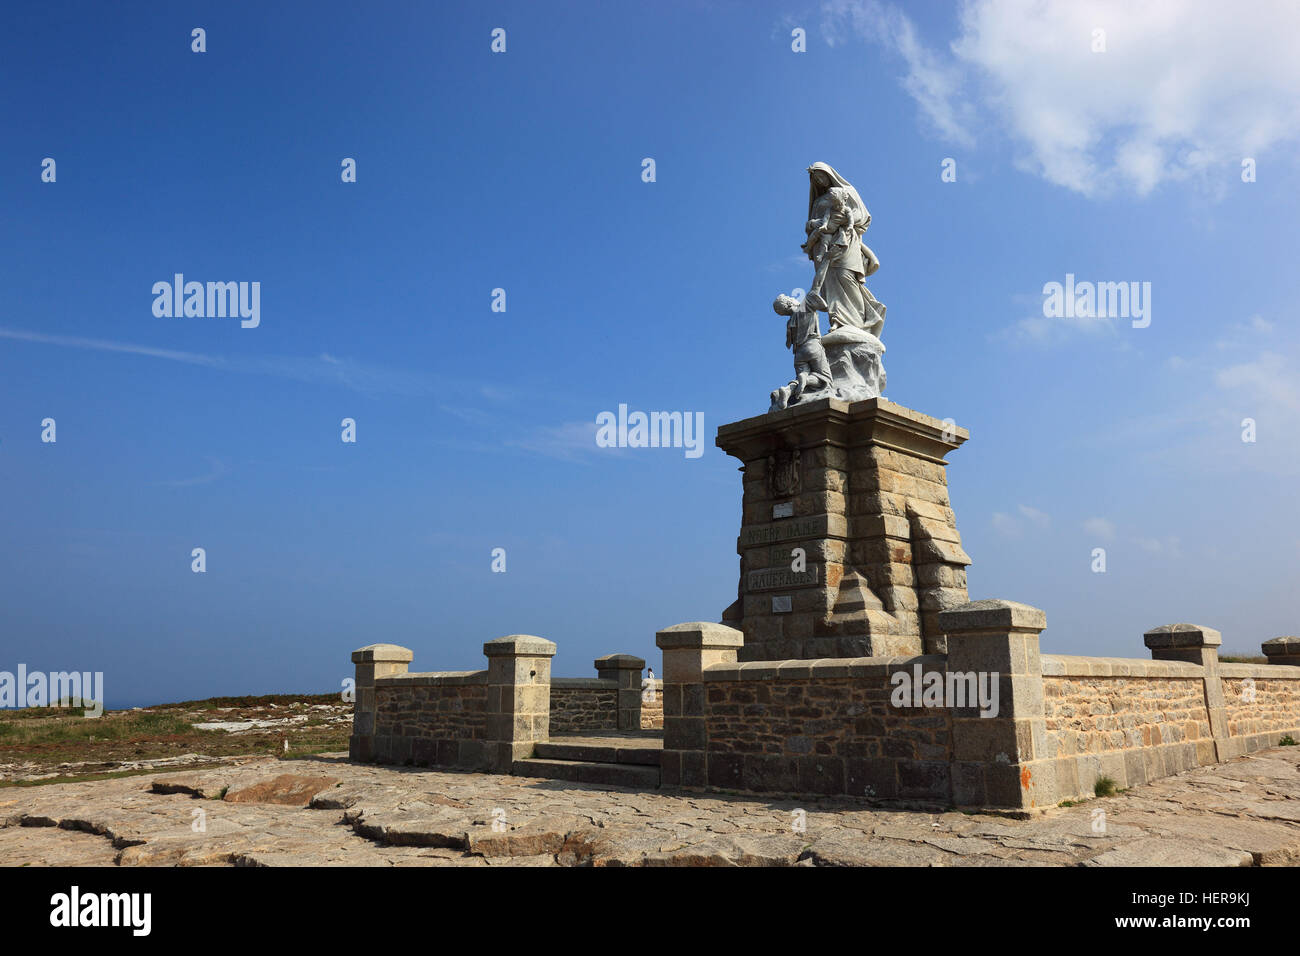 Frankreich, Region Bretagne, Cap Sizun, Denkmal, Notre Dame des Naufrages, Mahnmal Zum 2. Weltkrieg bin Pointe du Raz Stockfoto